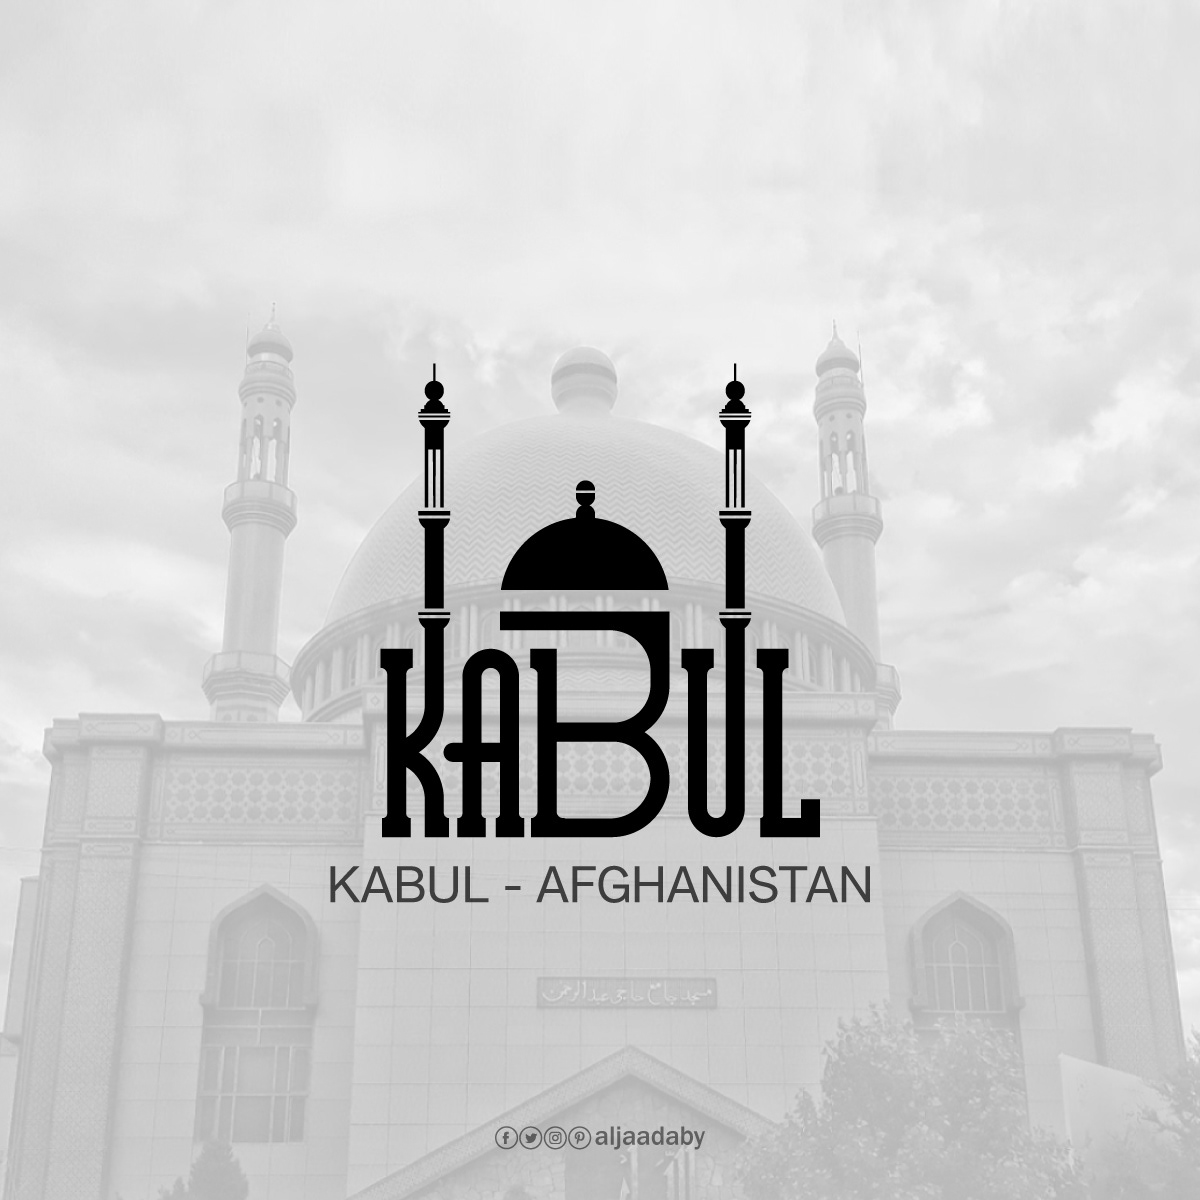 Typographic city logos based on their famous landmarks - Kabul